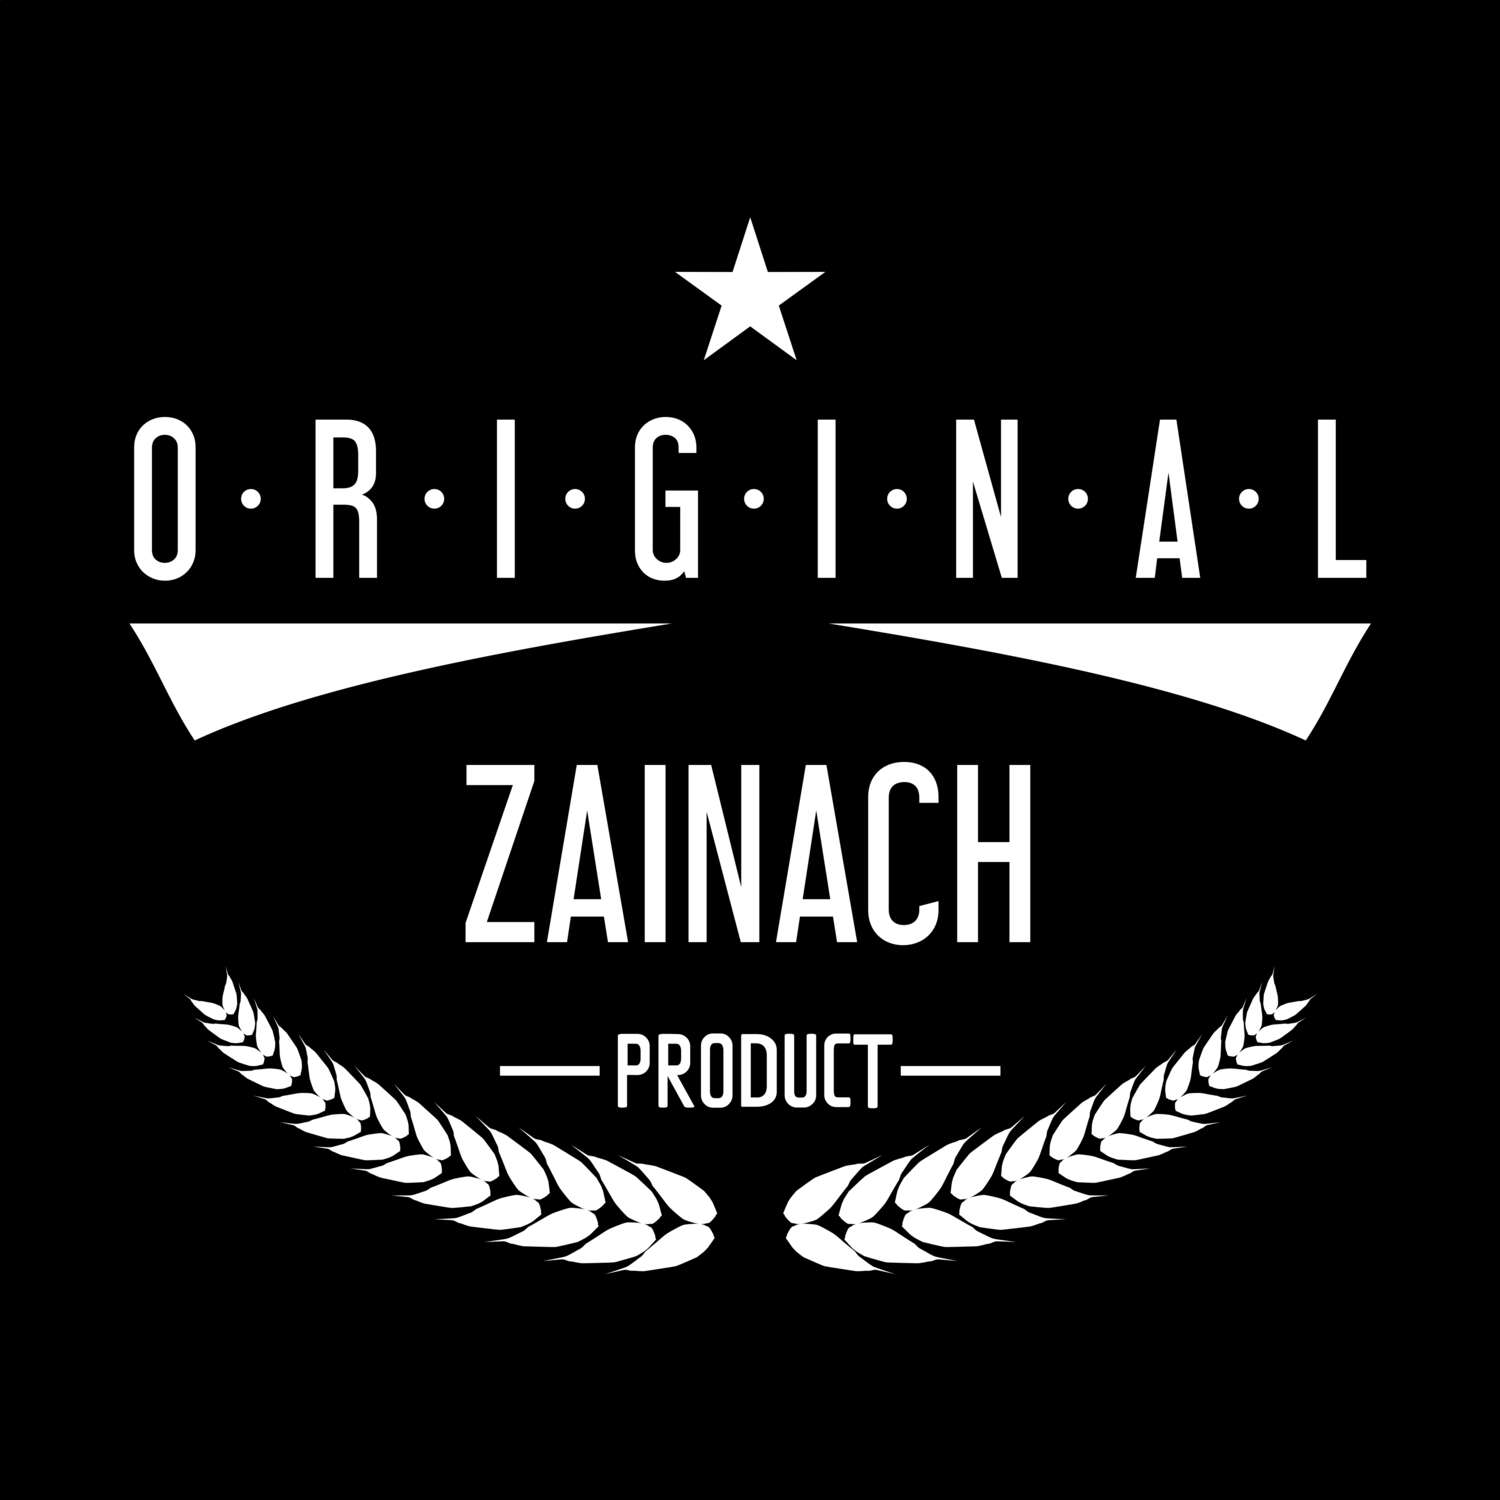 Zainach T-Shirt »Original Product«